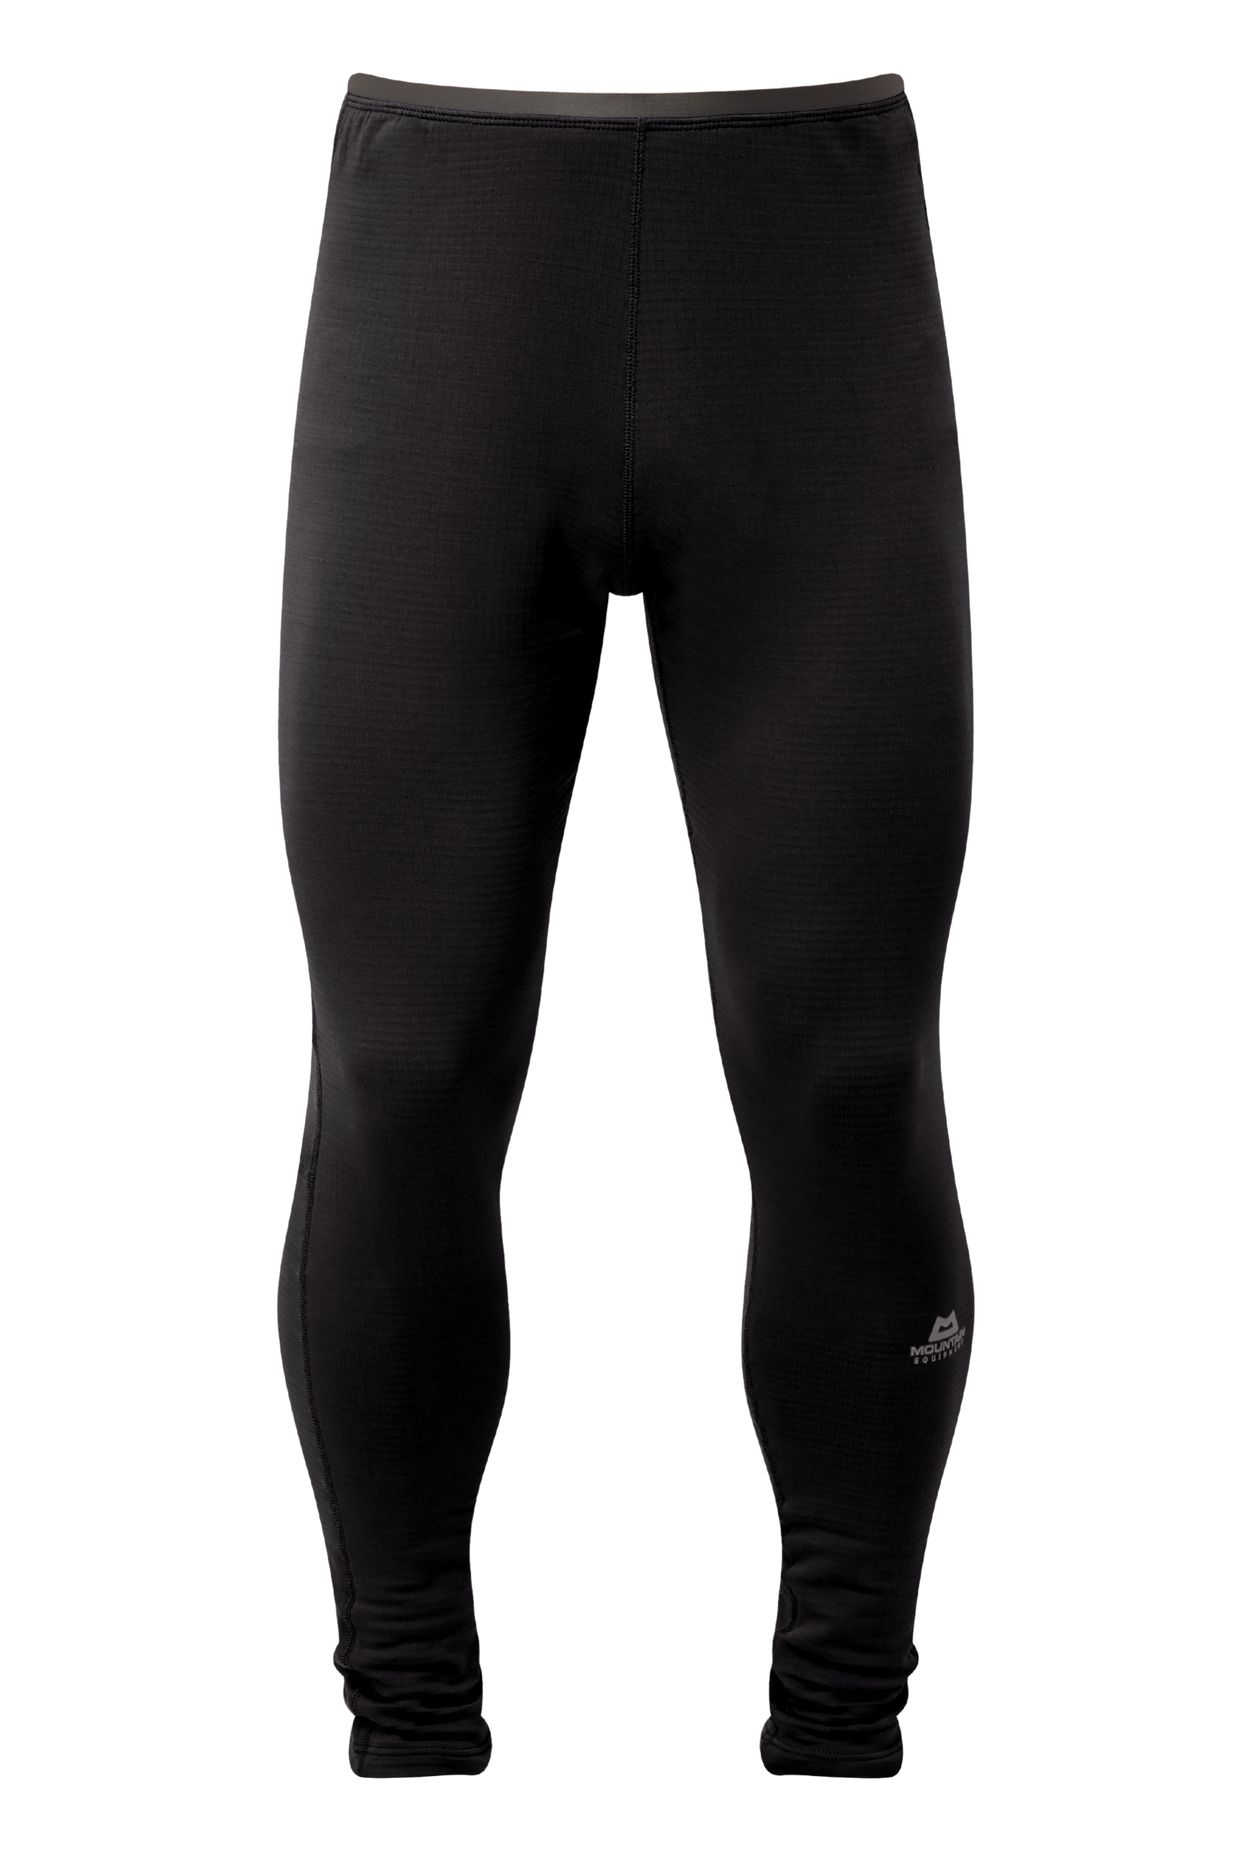 Mountain Equipment pánské fleece kalhoty Eclipse Pant Barva: black, Velikost: XL